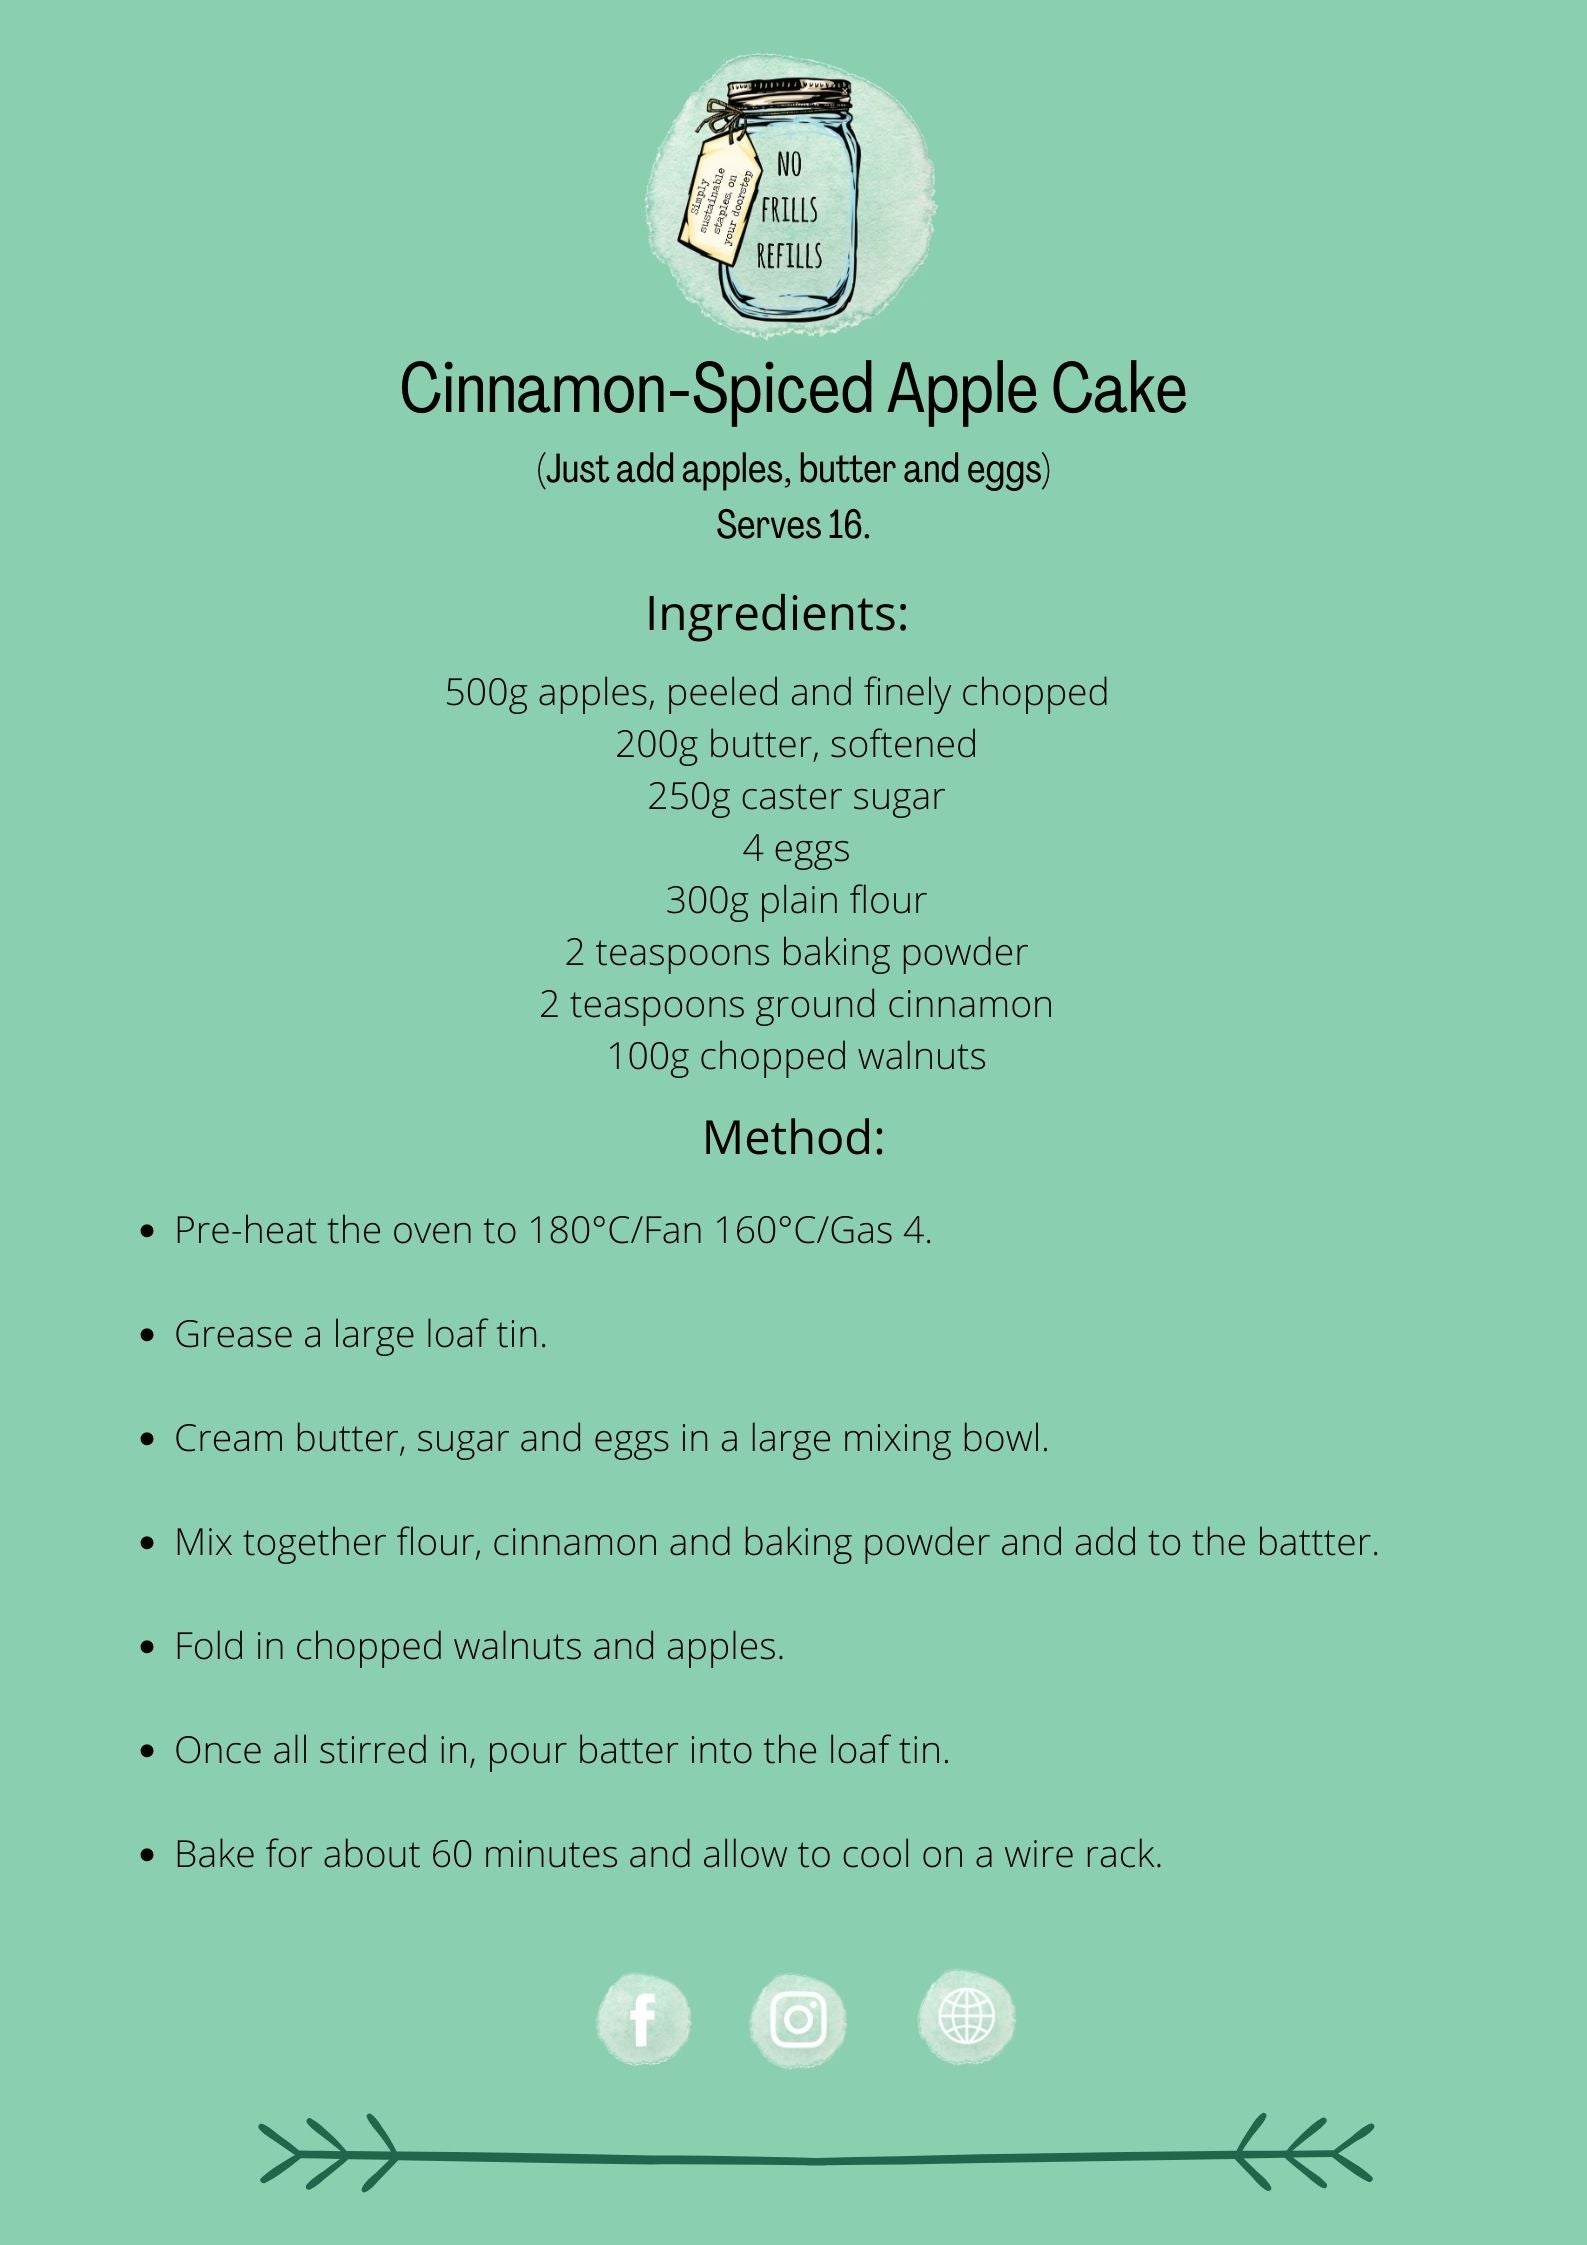 No Frills Cinnamon-Spiced Apple Cake Kit.